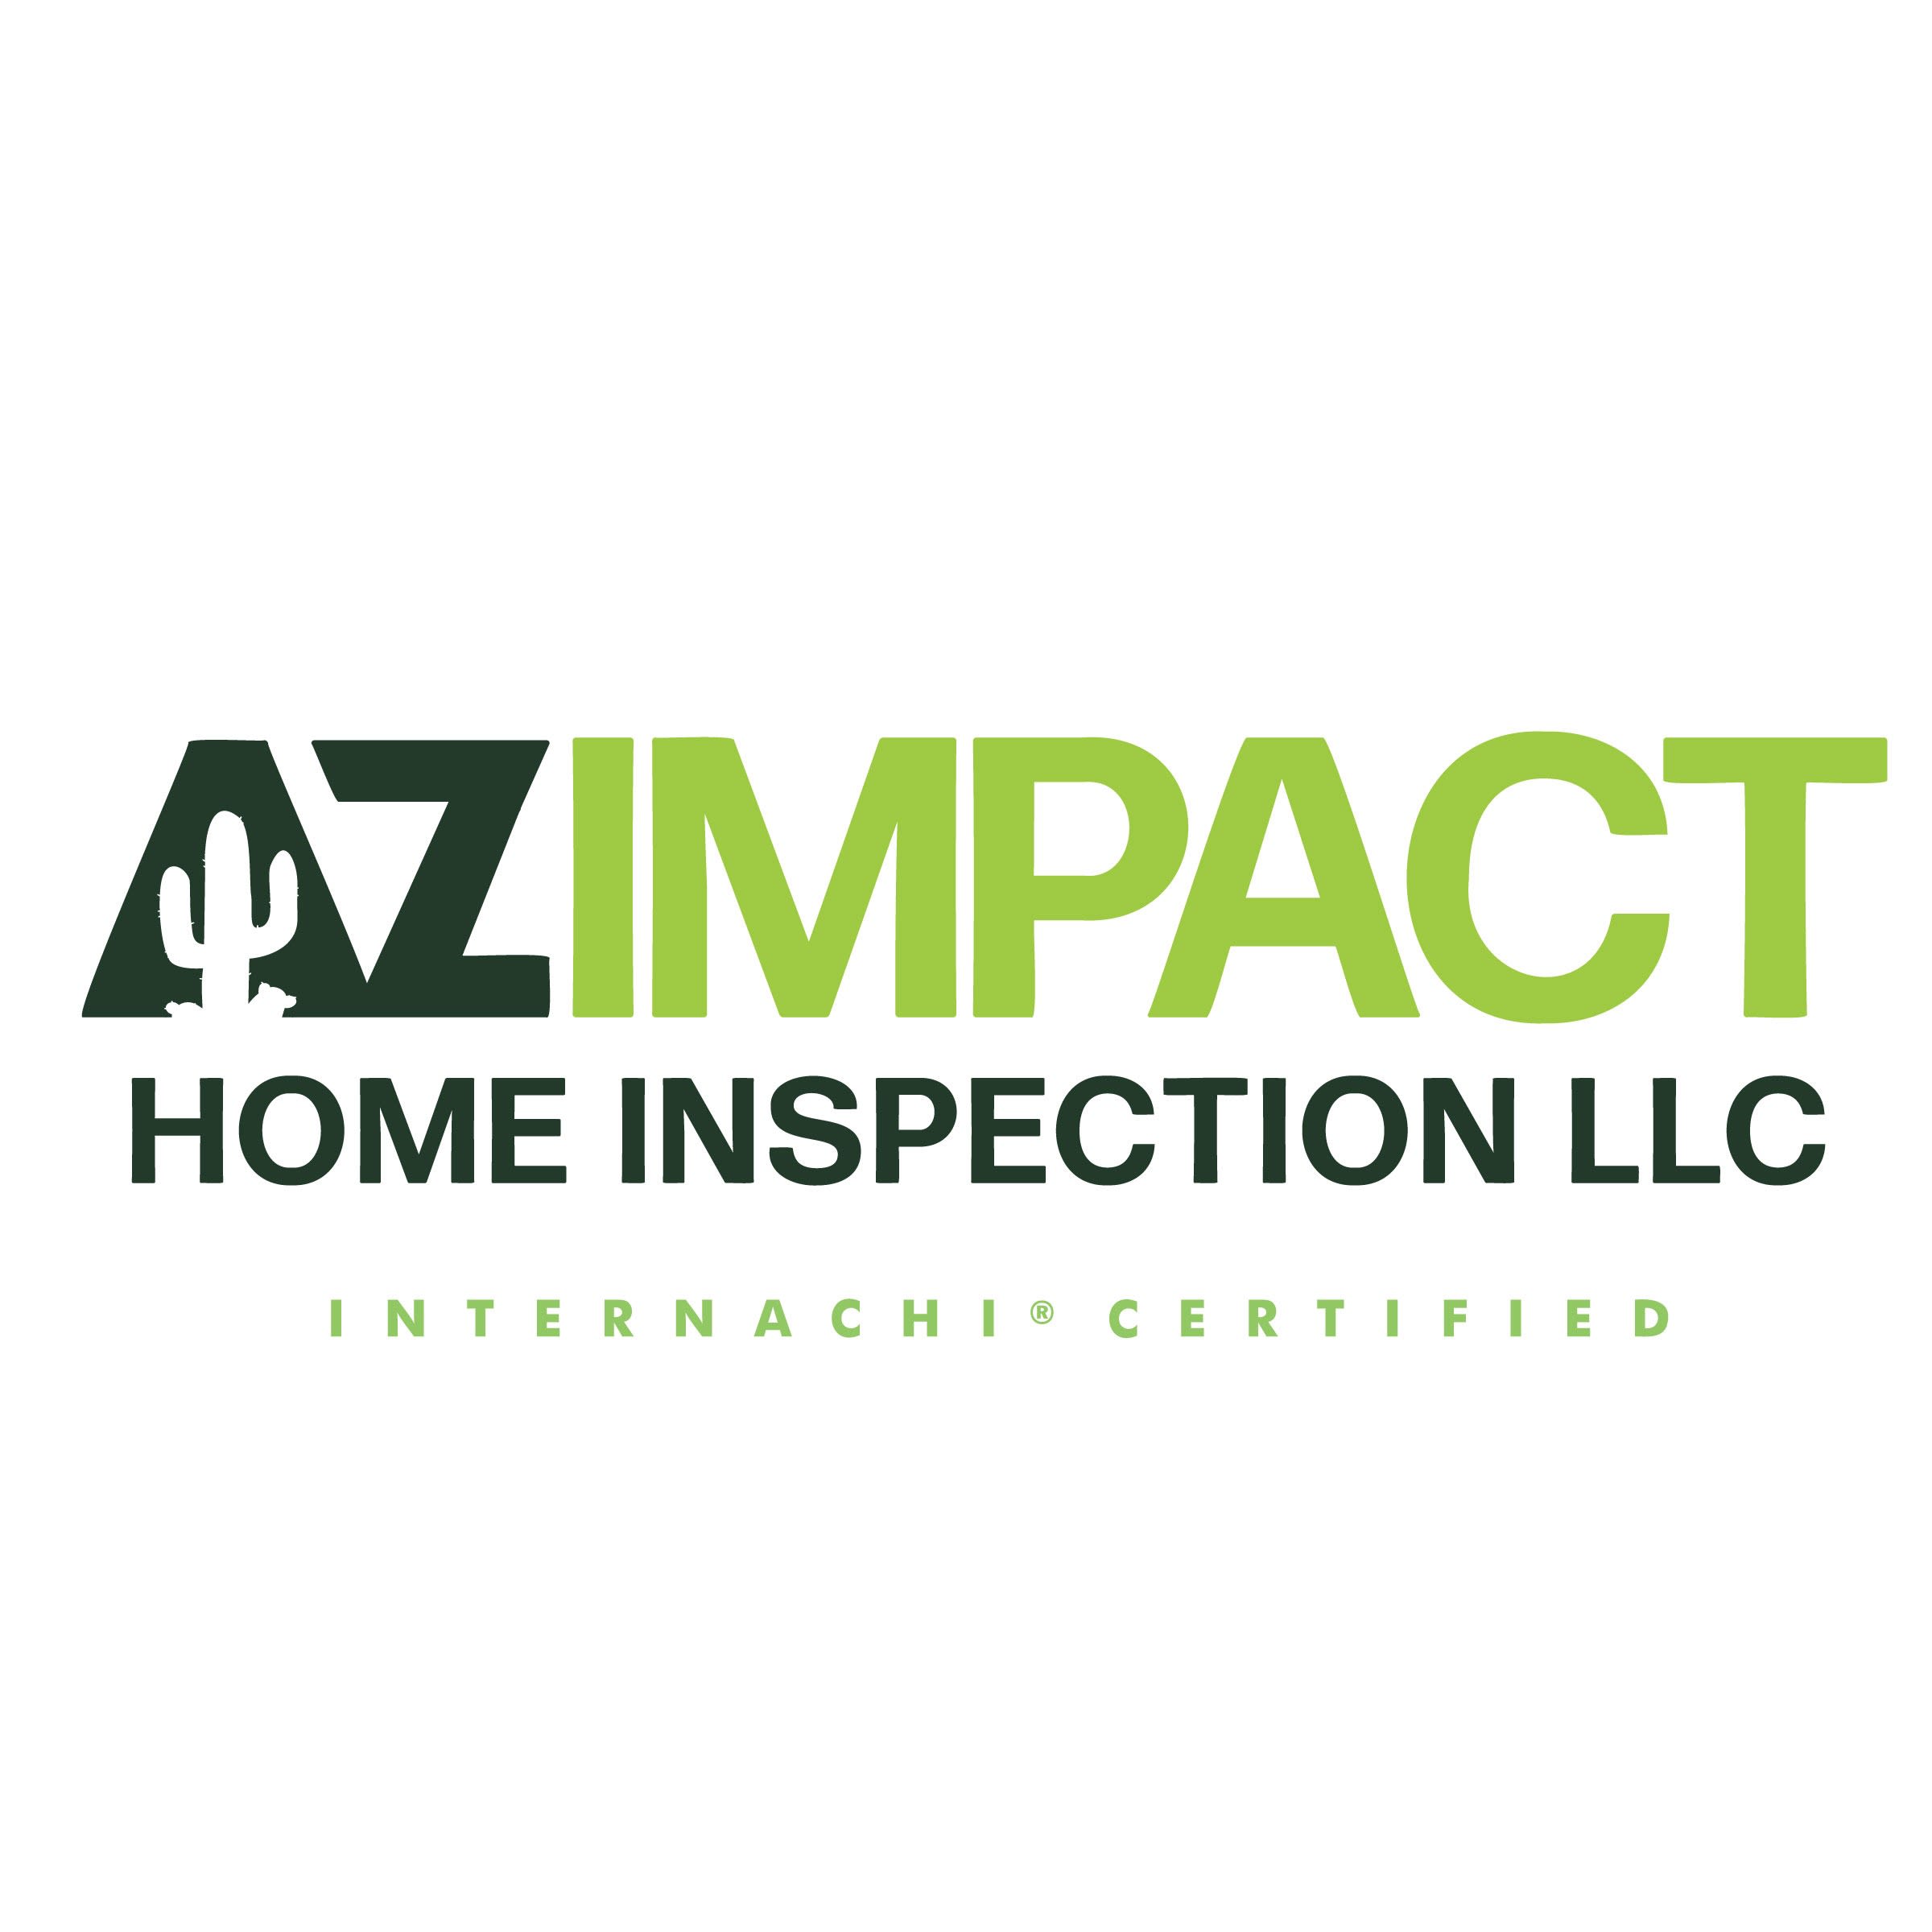 AZ Impact Home Inspection LLC Logo